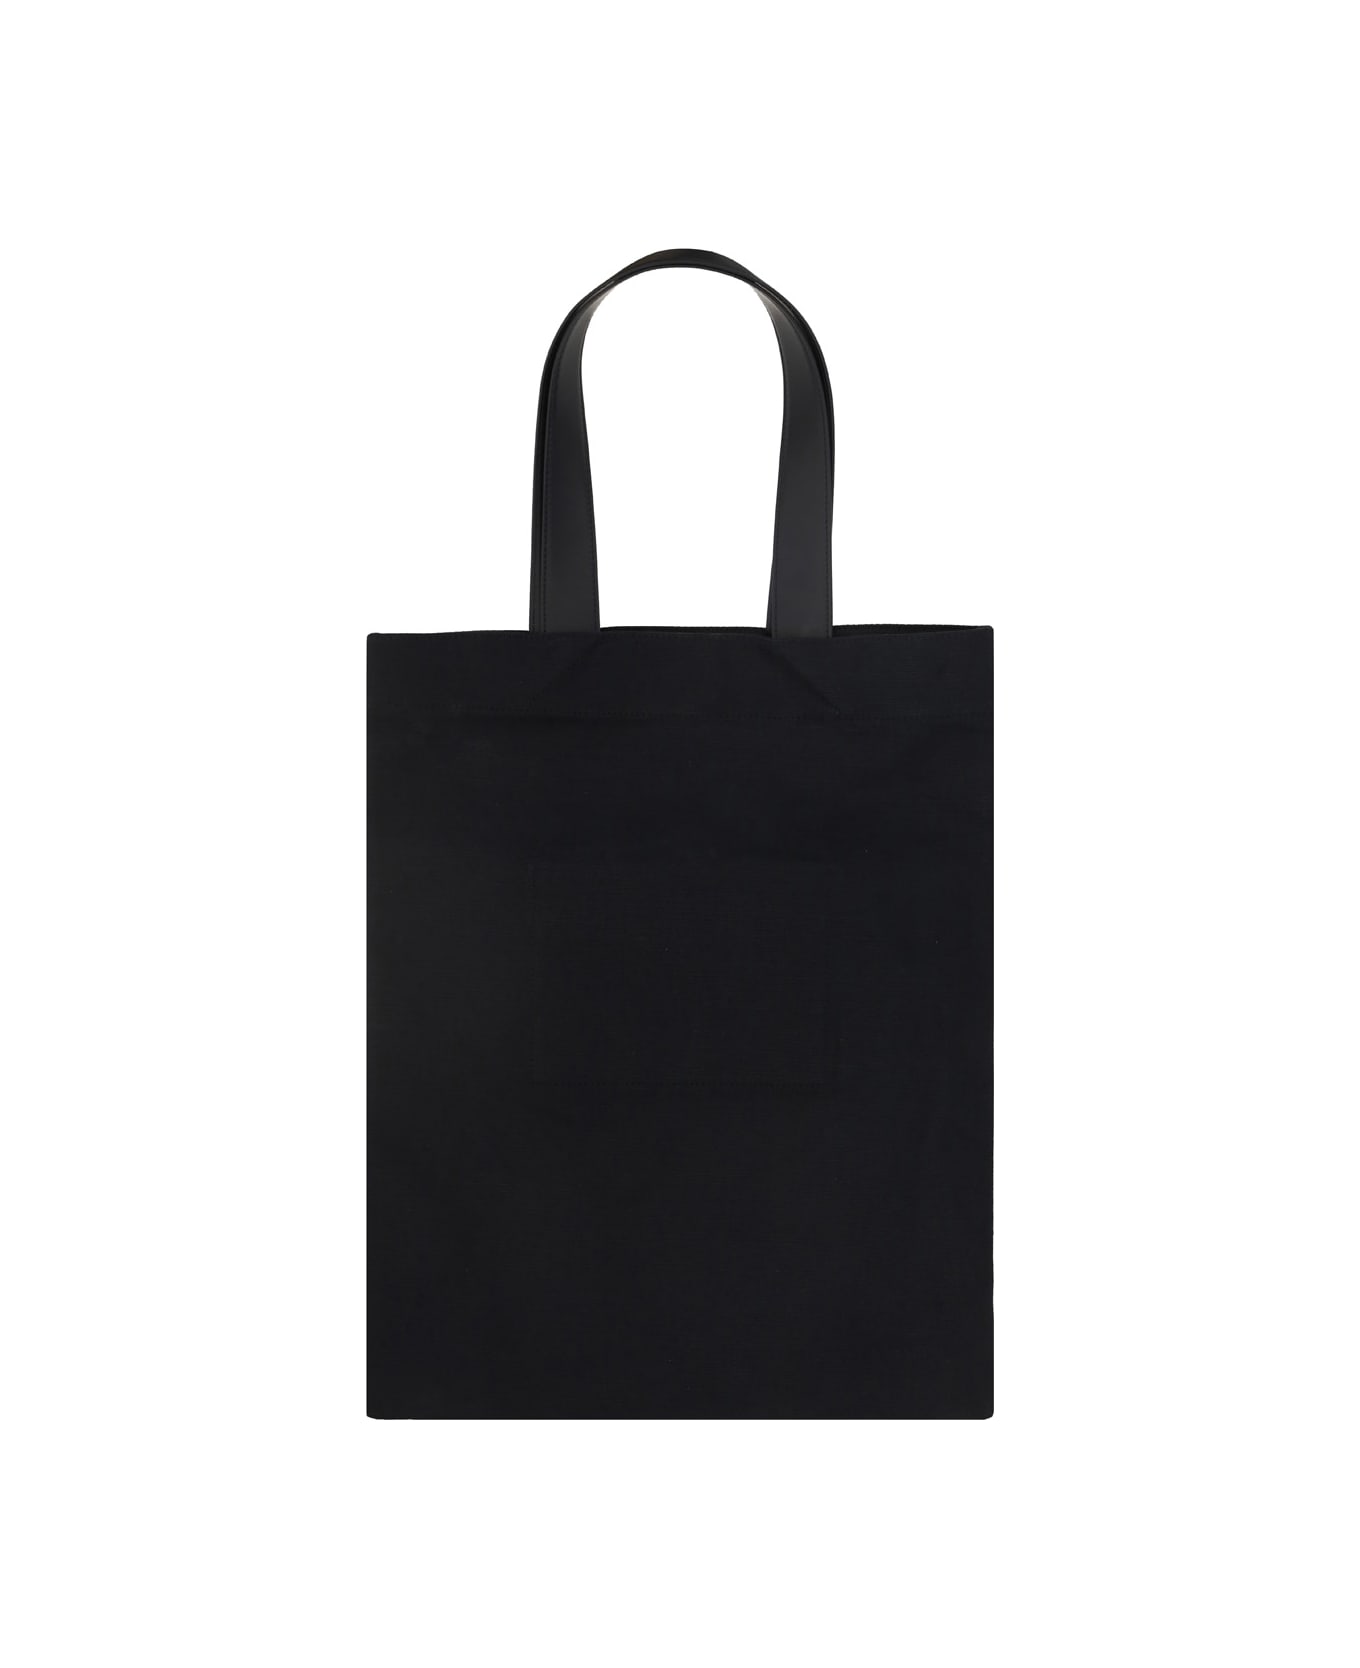 Jil Sander Shopping Bag - Black